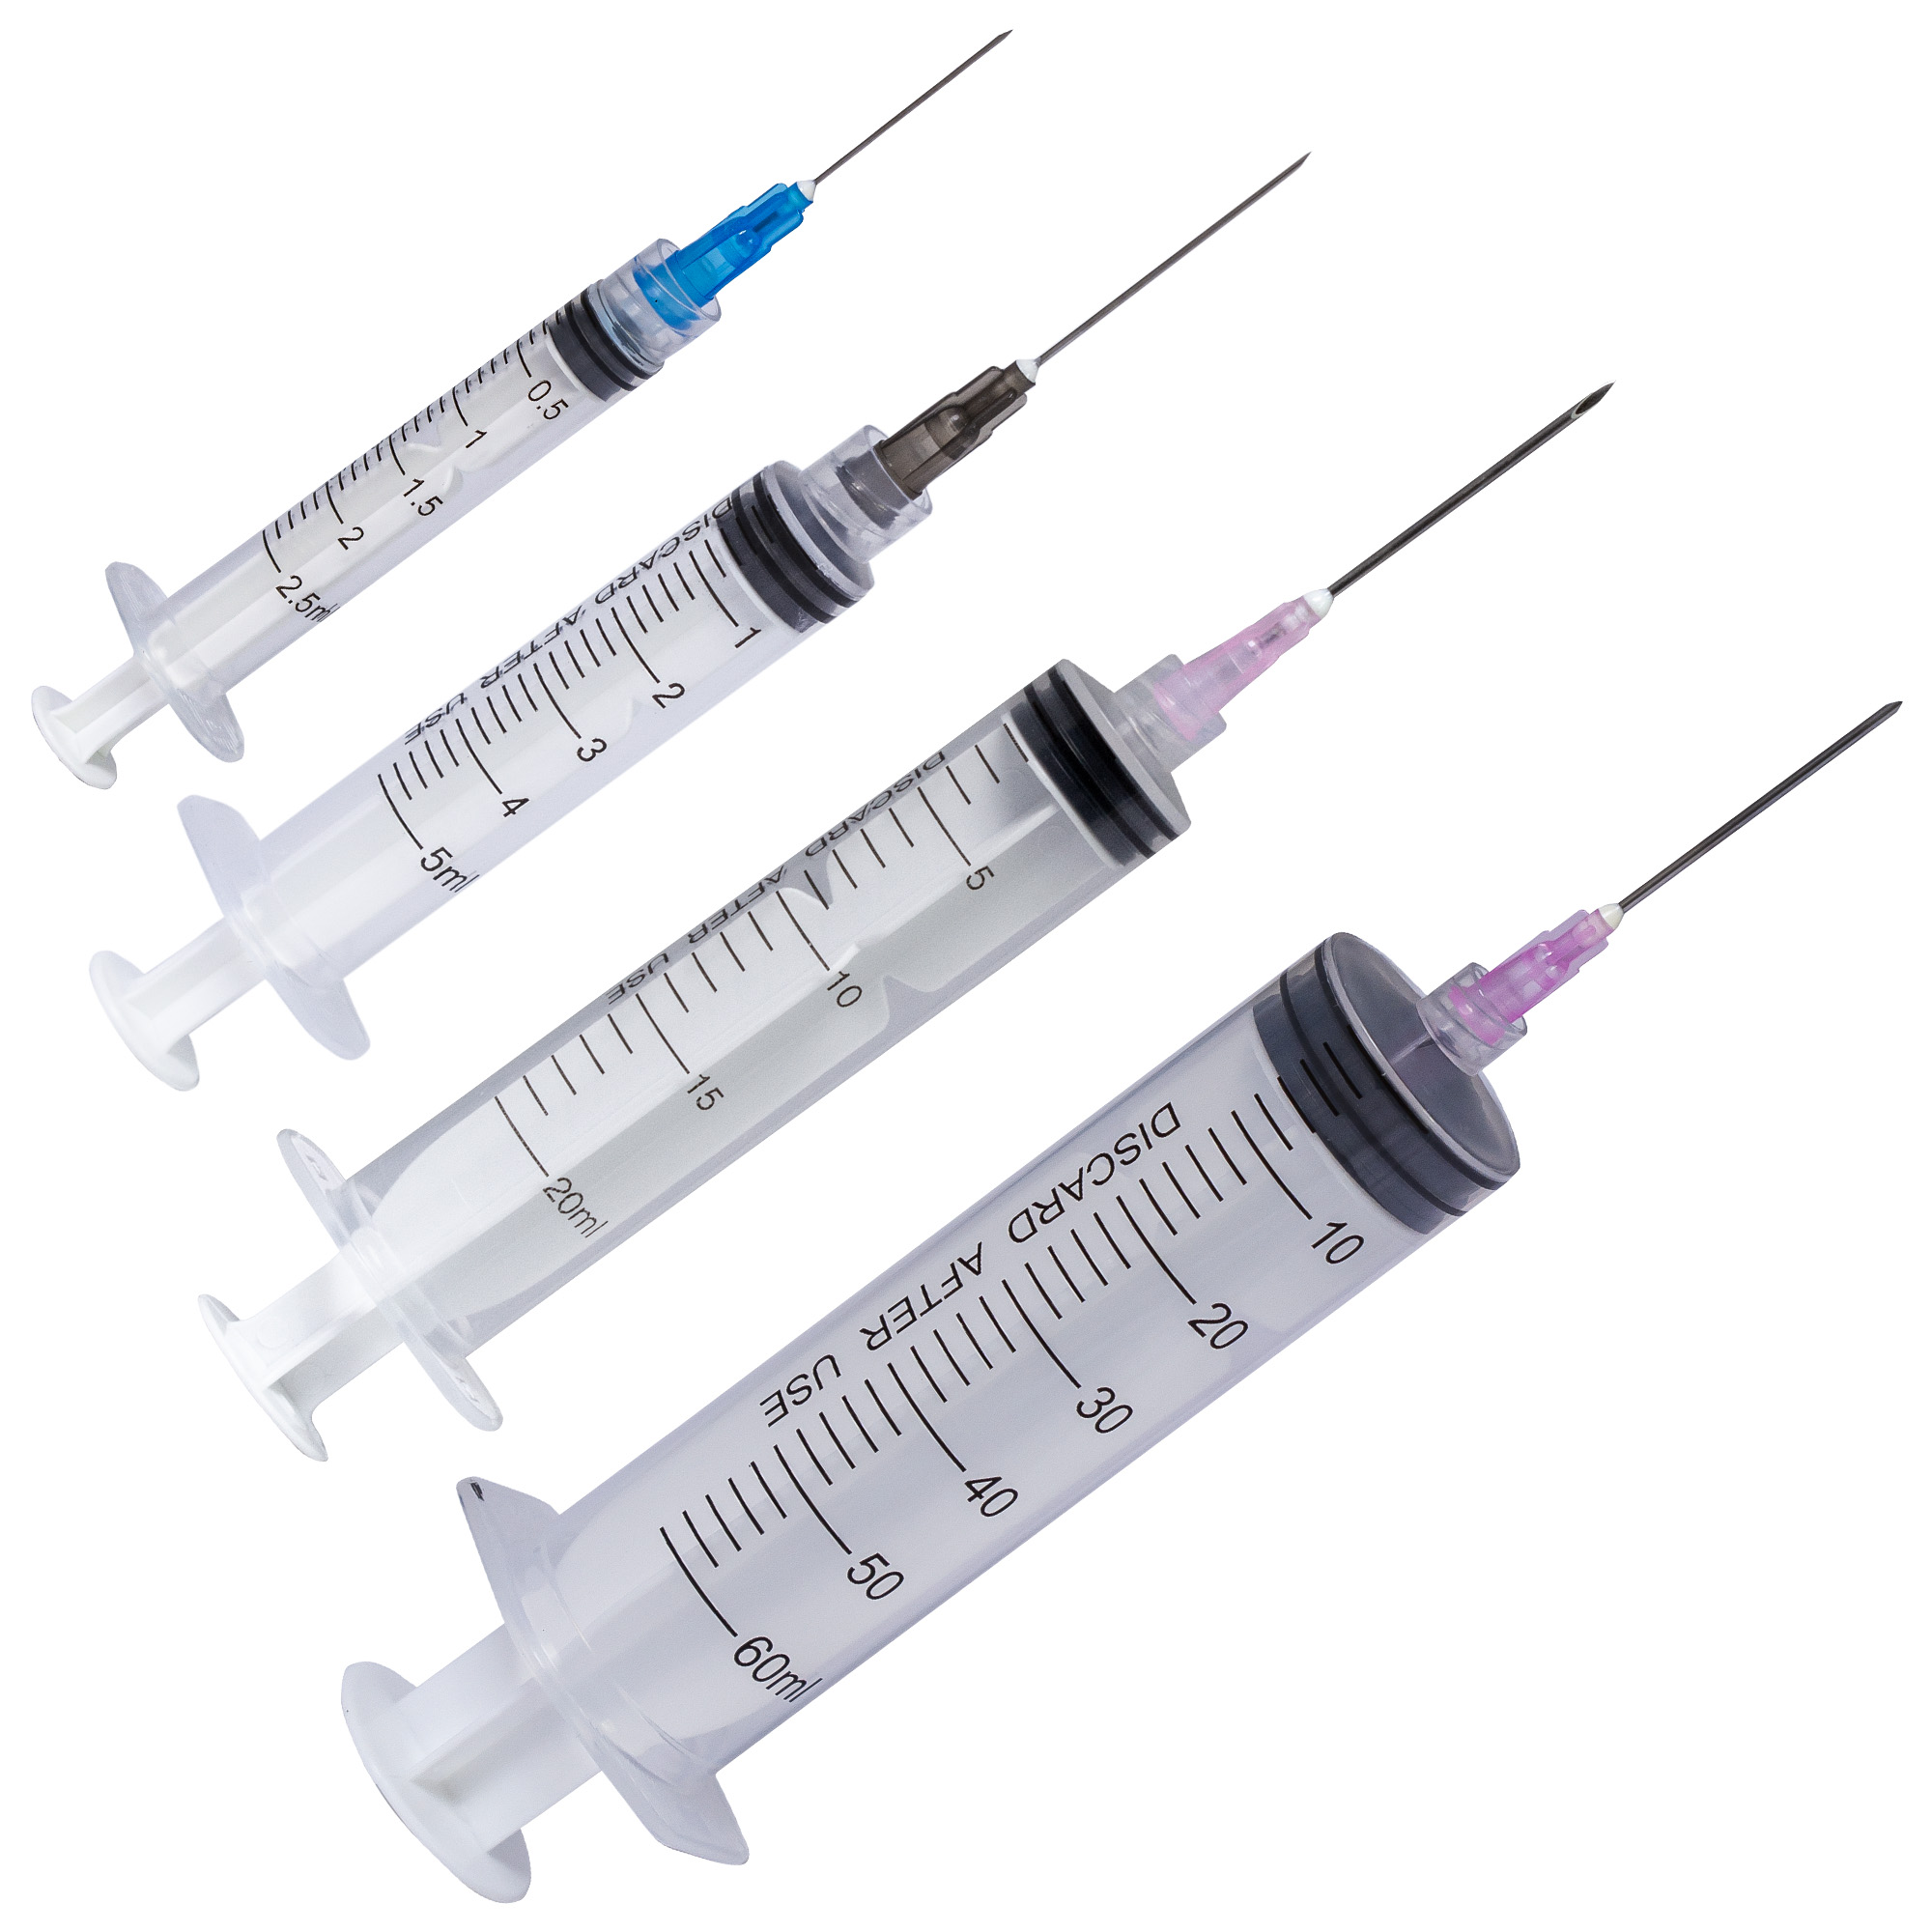 Medical practice/SYRINGES AND MEDICAL NEEDLES/Luer Lock Medical Syringes